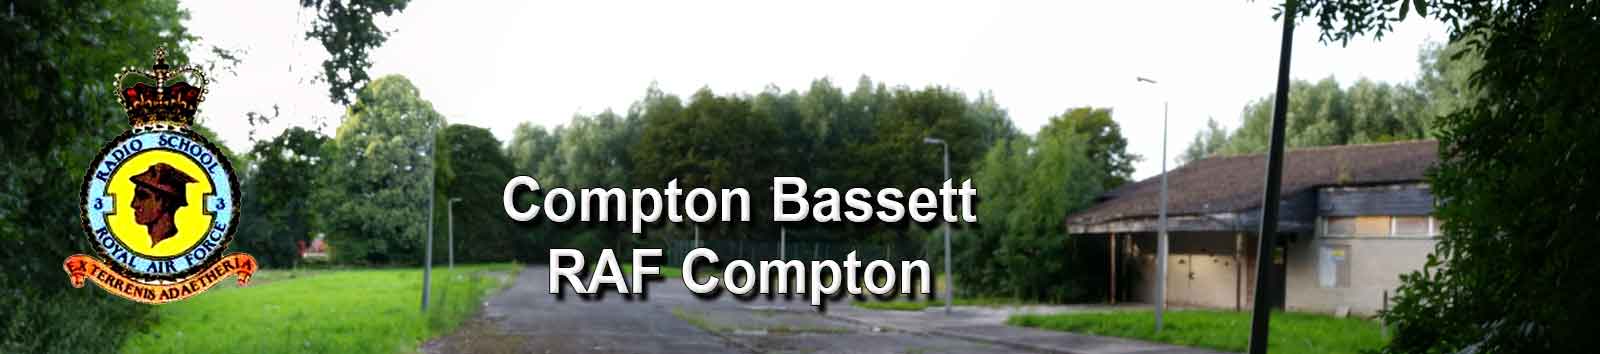 Compton Bassett